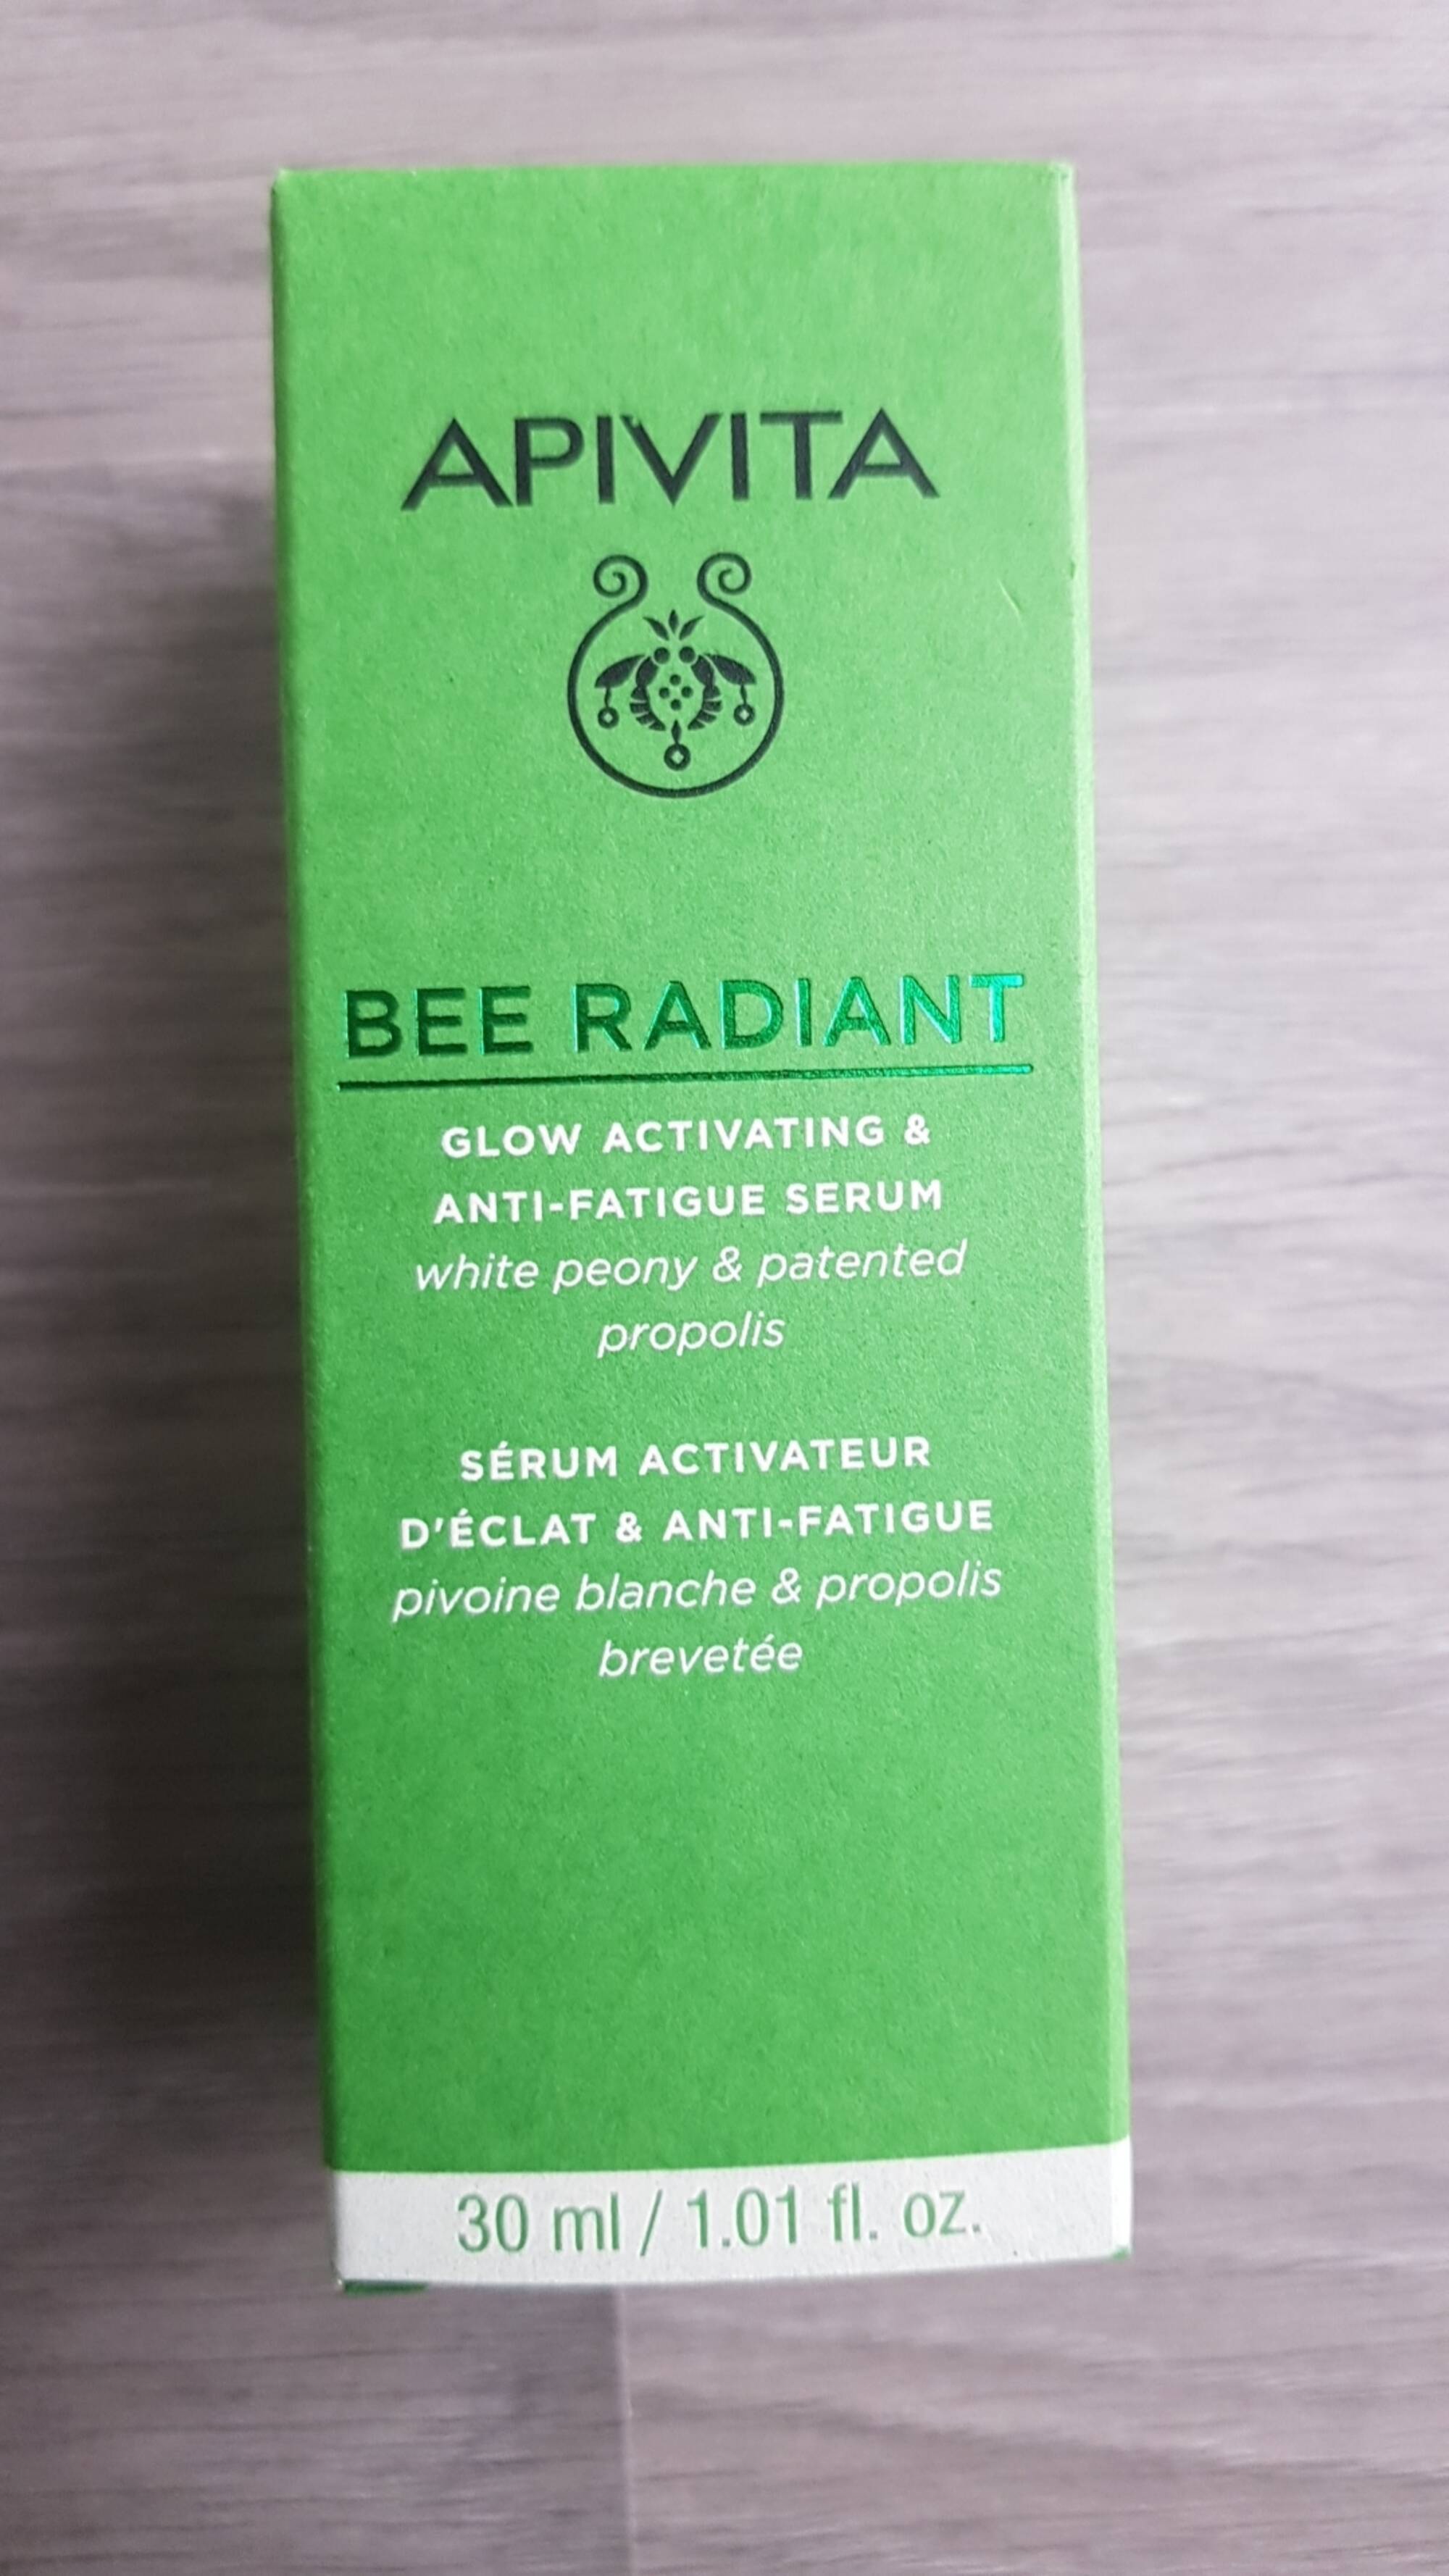 APIVITA - Bee radiant - Sérum activateur d'éclat & anti-fatigue